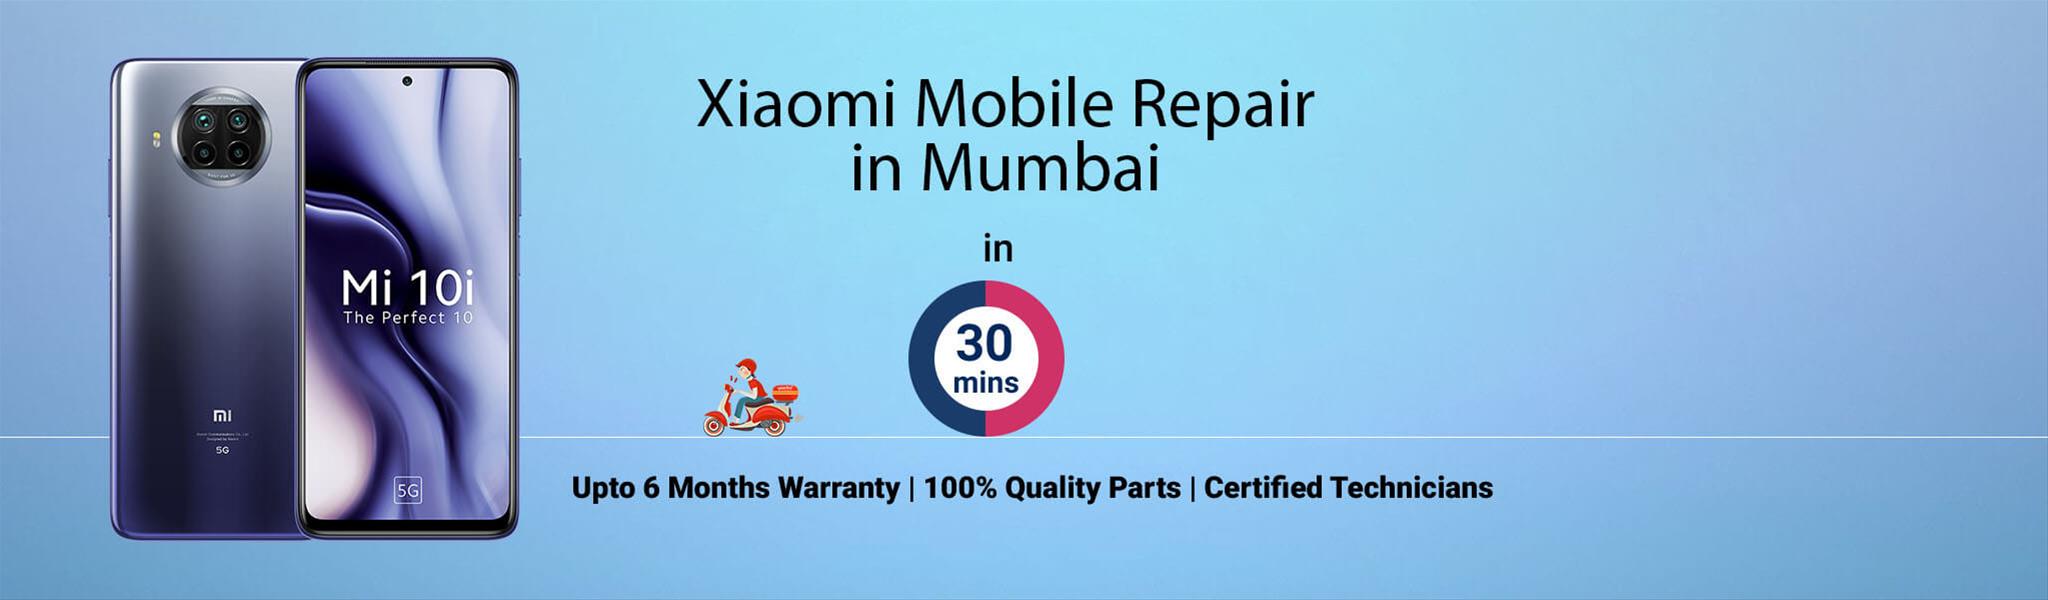 xiaomi-repair-service-banner-mumbai.jpg